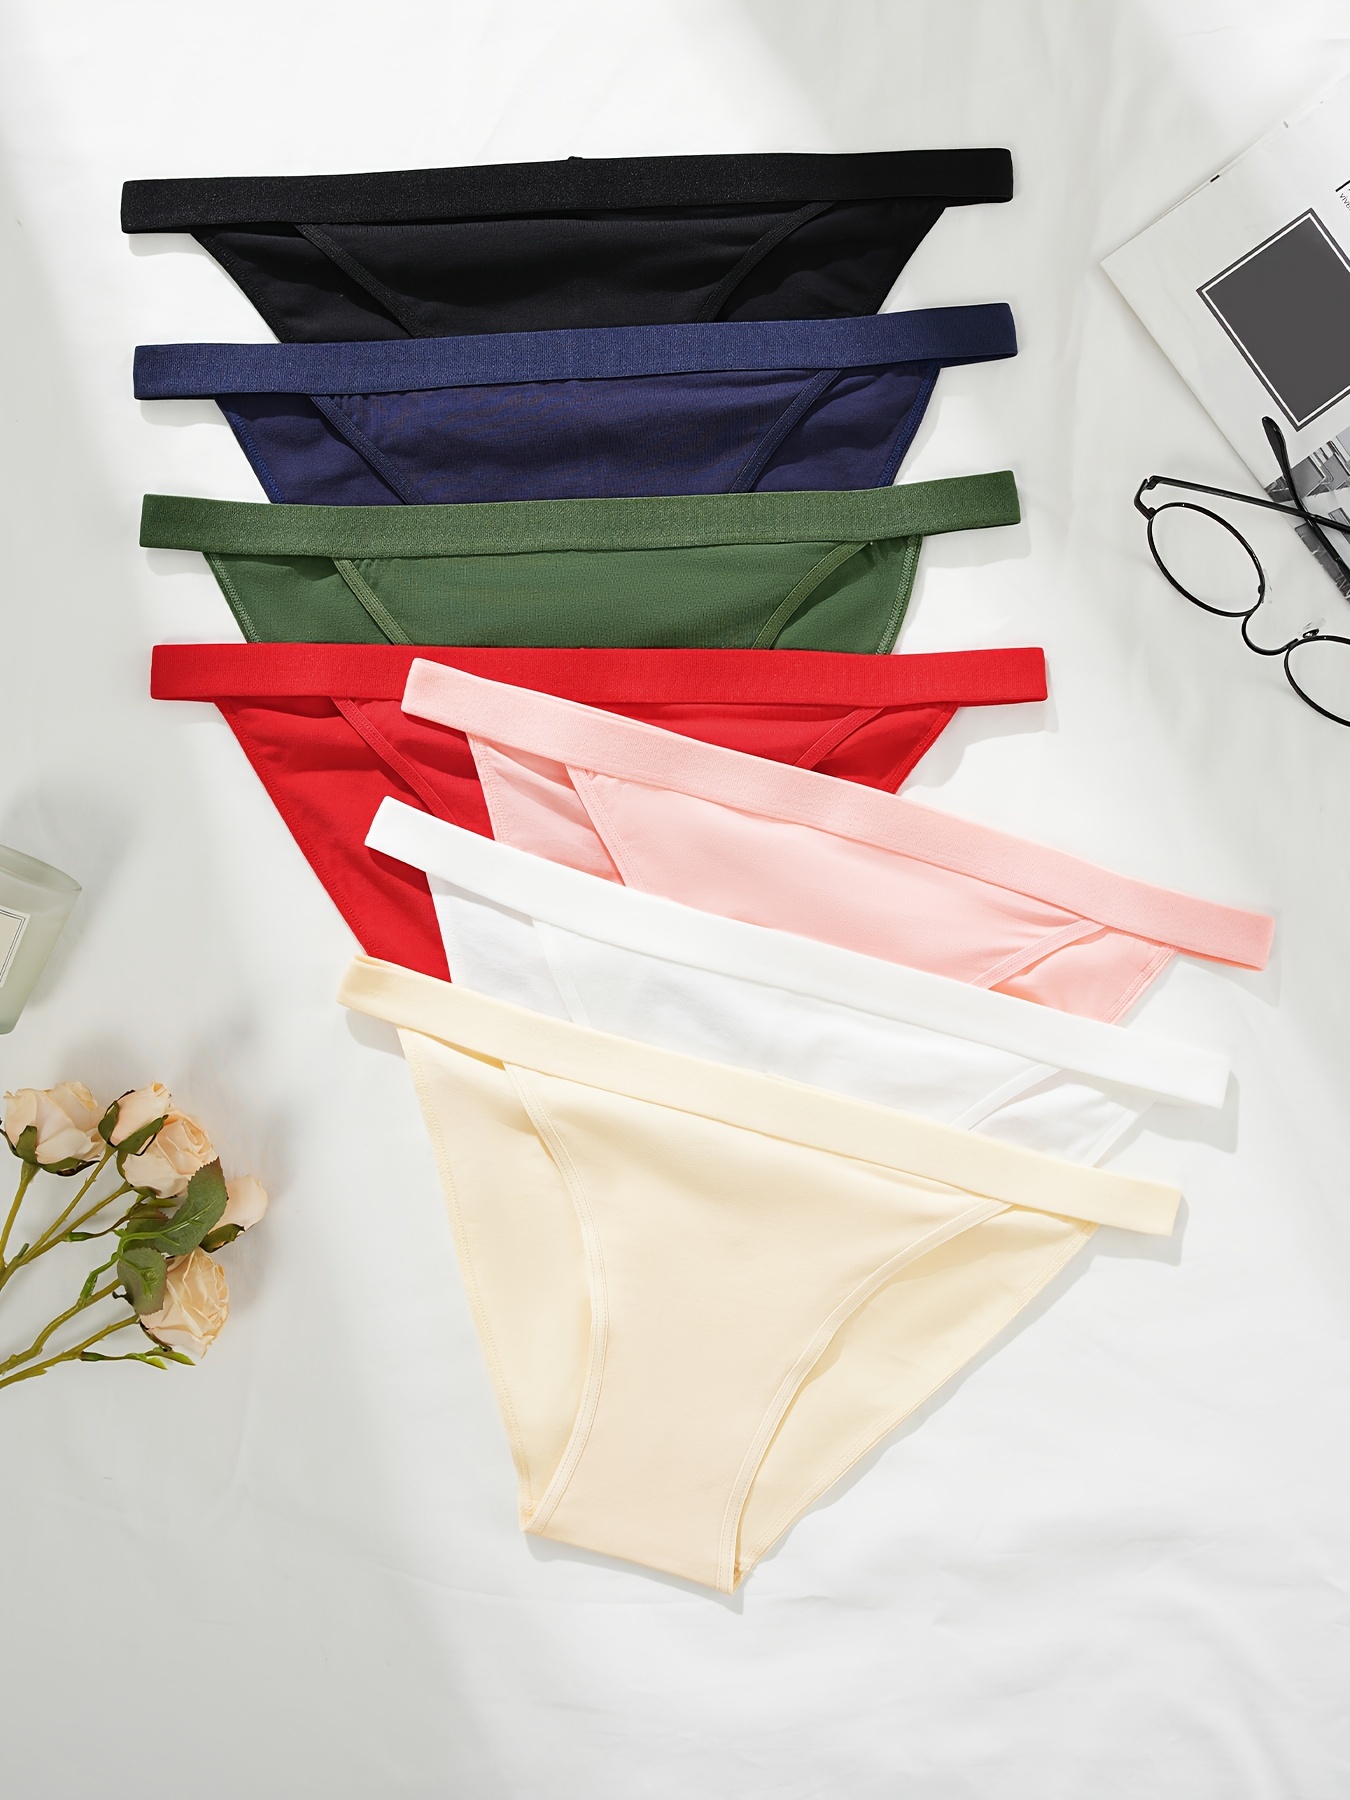 7 Pcs Women's Mixed Color Low Waist Tanga Panties, Soft Breathable Cheeky  Panties, Women's Underwear & Lingerie